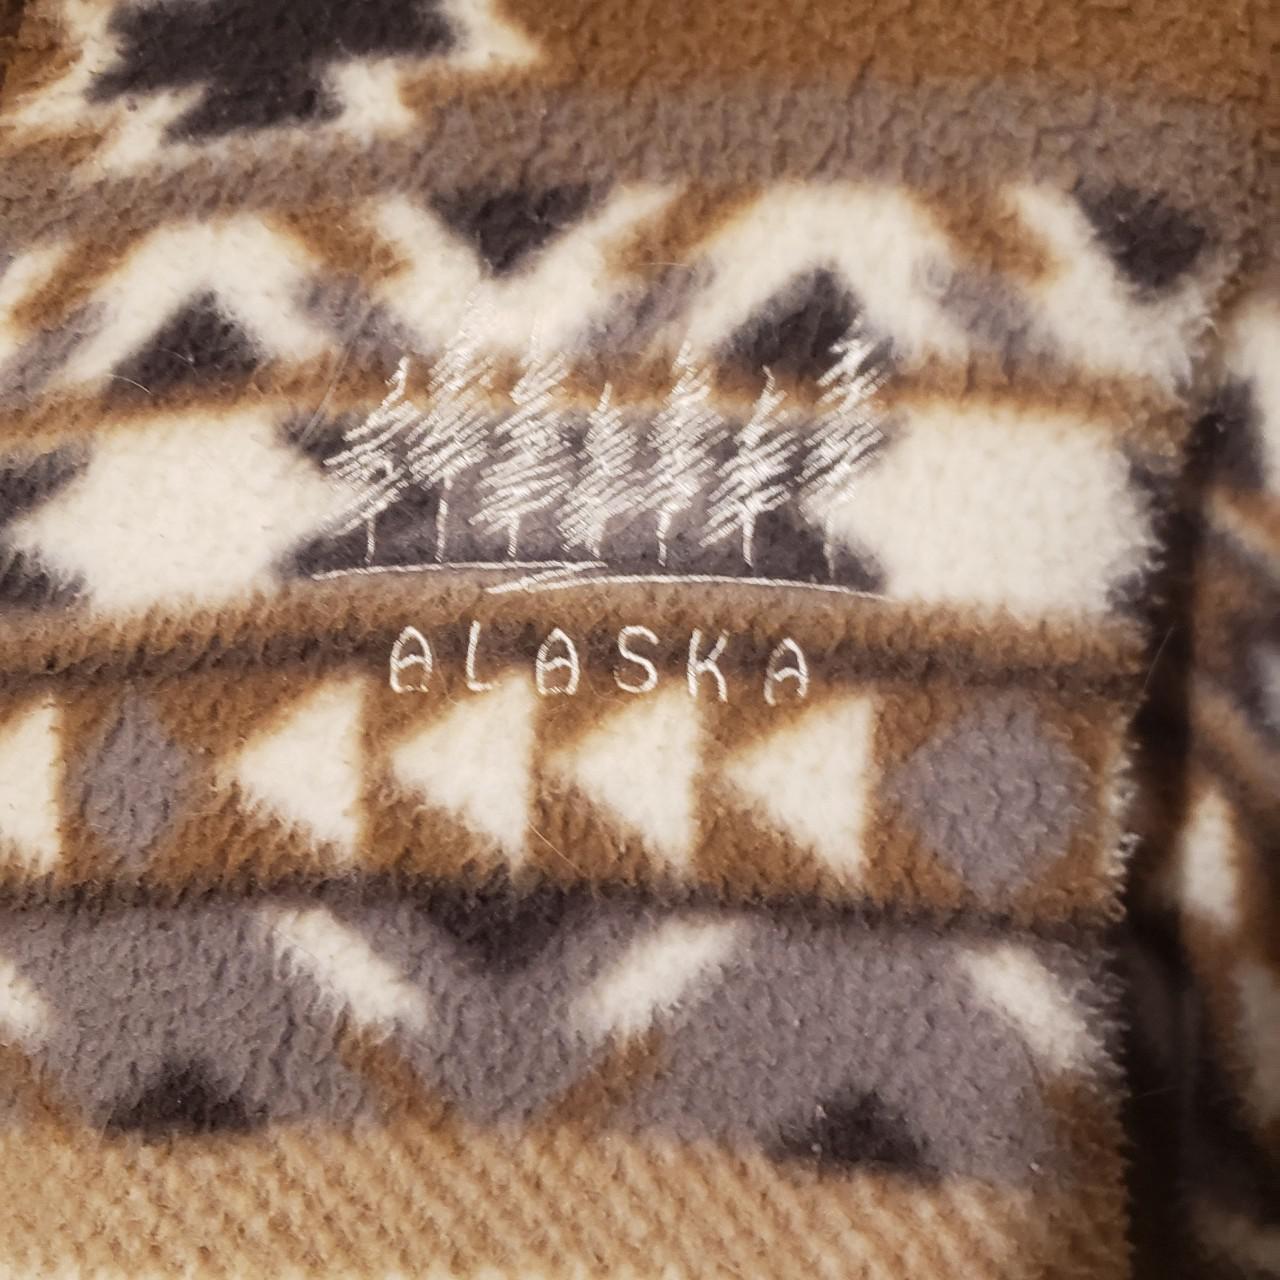 Product Image 2 - Vintage Alaska zip up sweater
Western